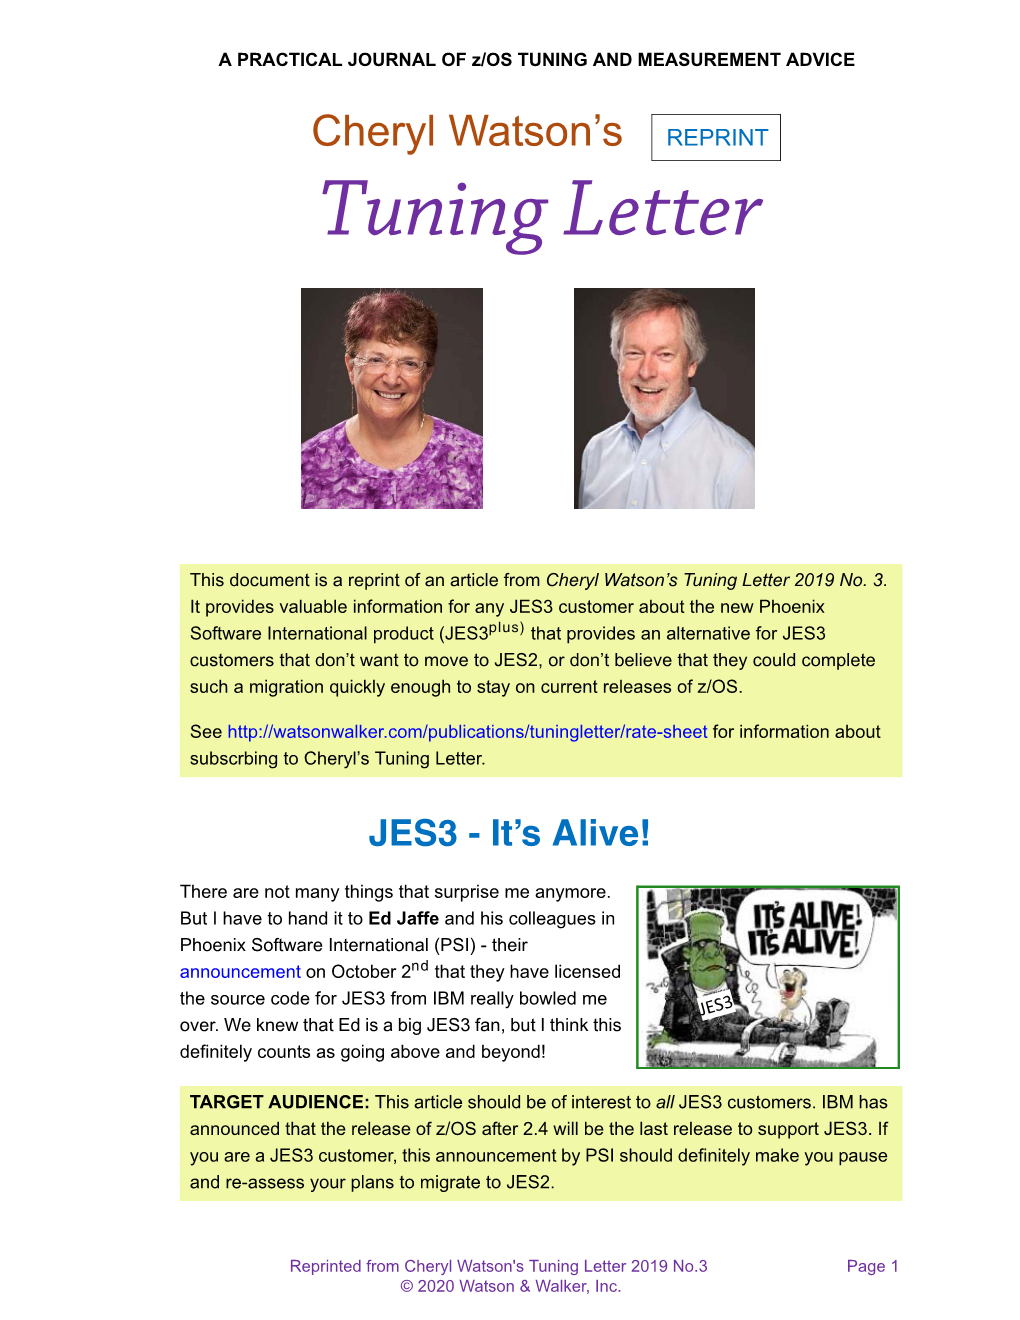 Cheryl Watson's Tuning Letter 2019 No.3 Page 1 © 2020 Watson & Walker, Inc